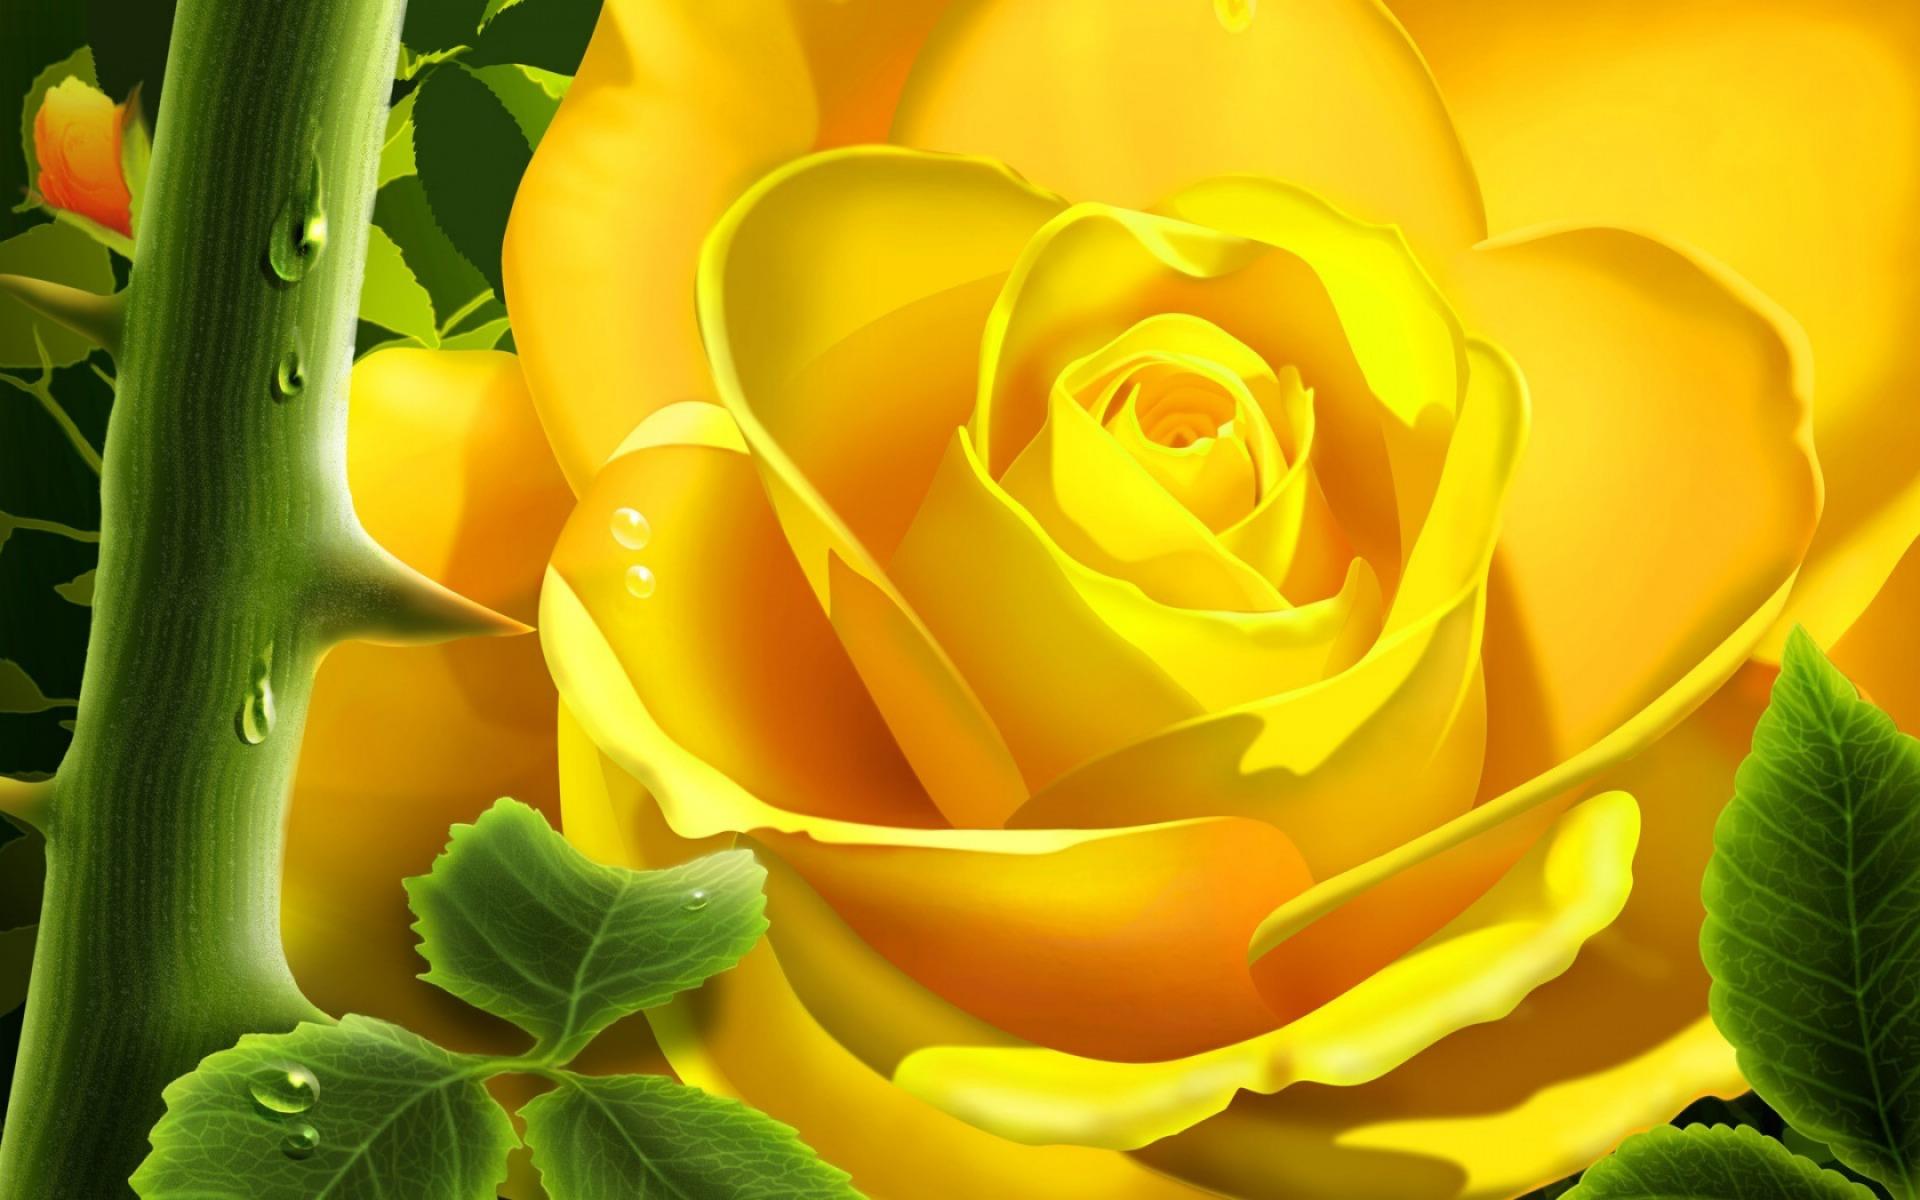 rose wallpaper hd,flower,yellow,petal,rose,garden roses